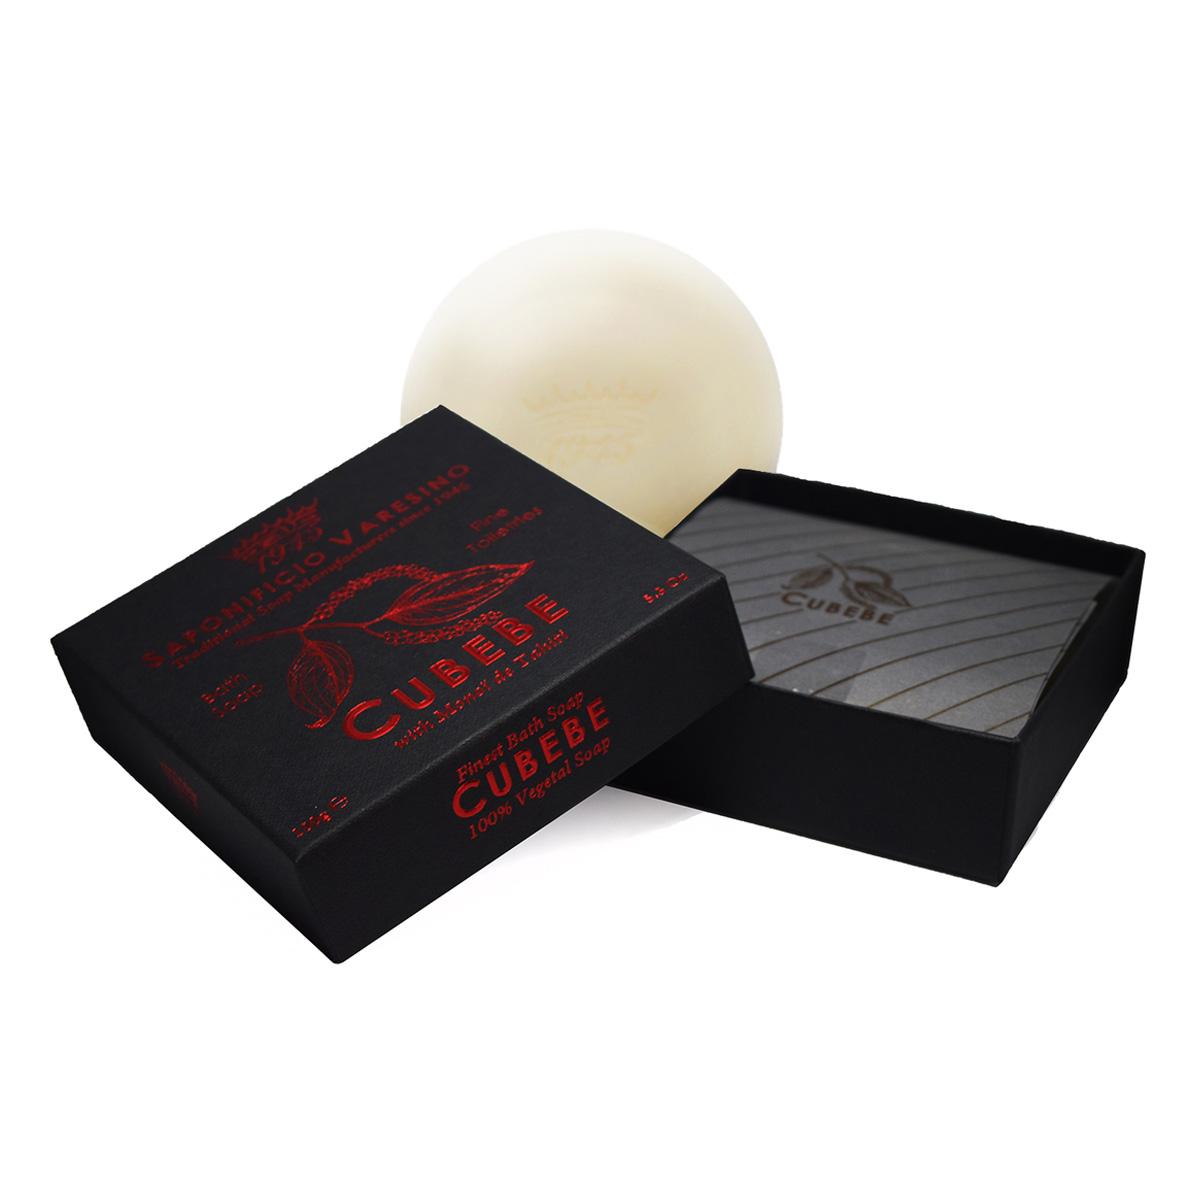 Primary image of Men's Bath Soap - Cubebe